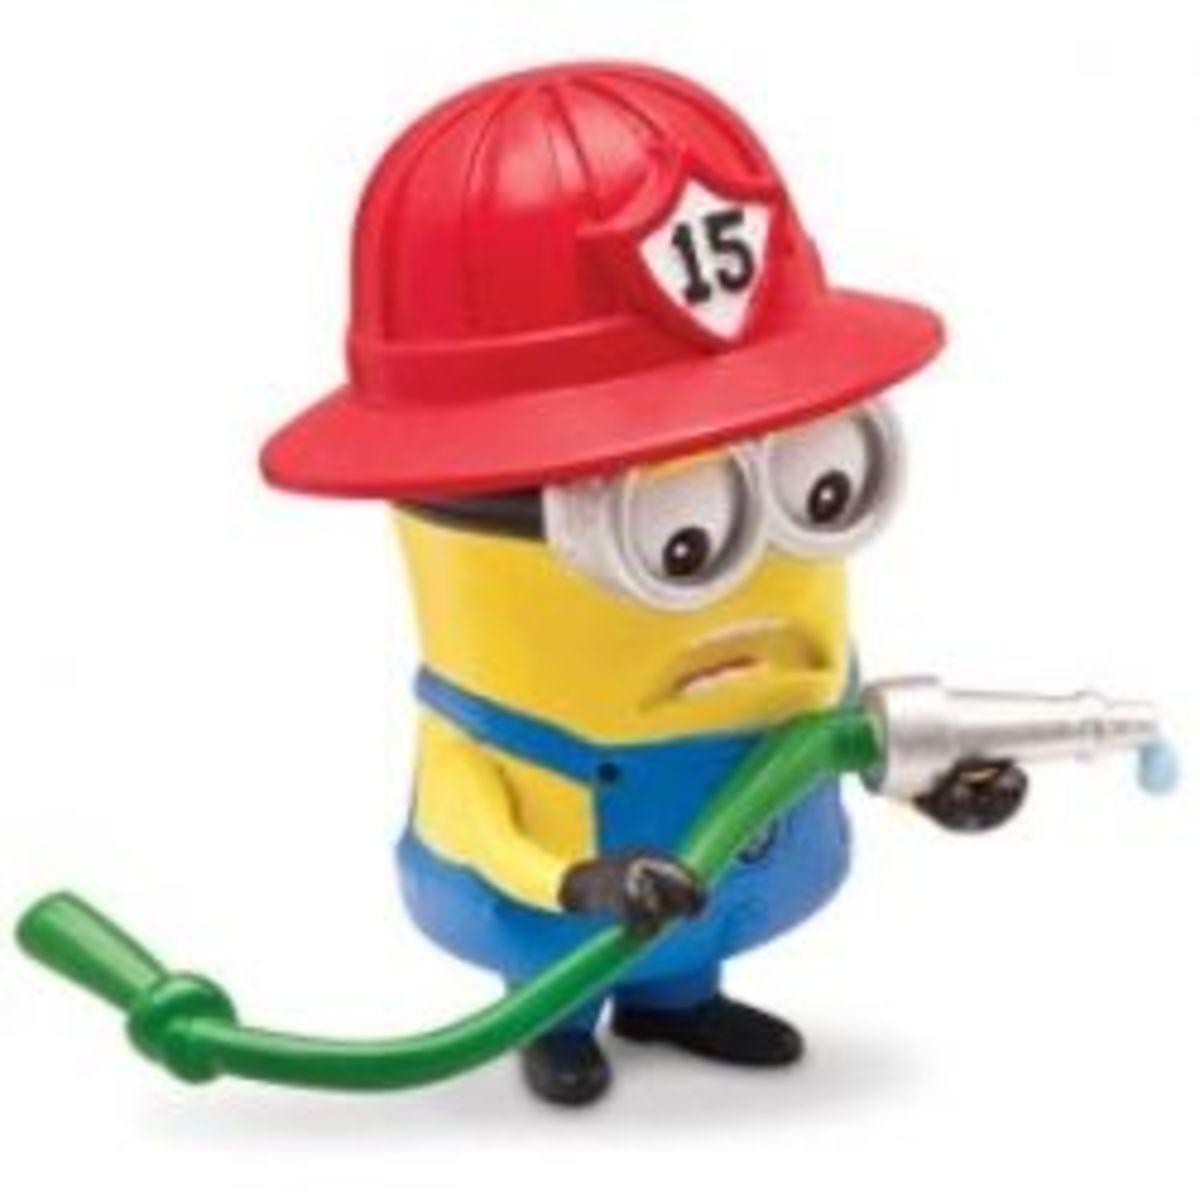 Minion Fire Fighter Figure available on Amazon